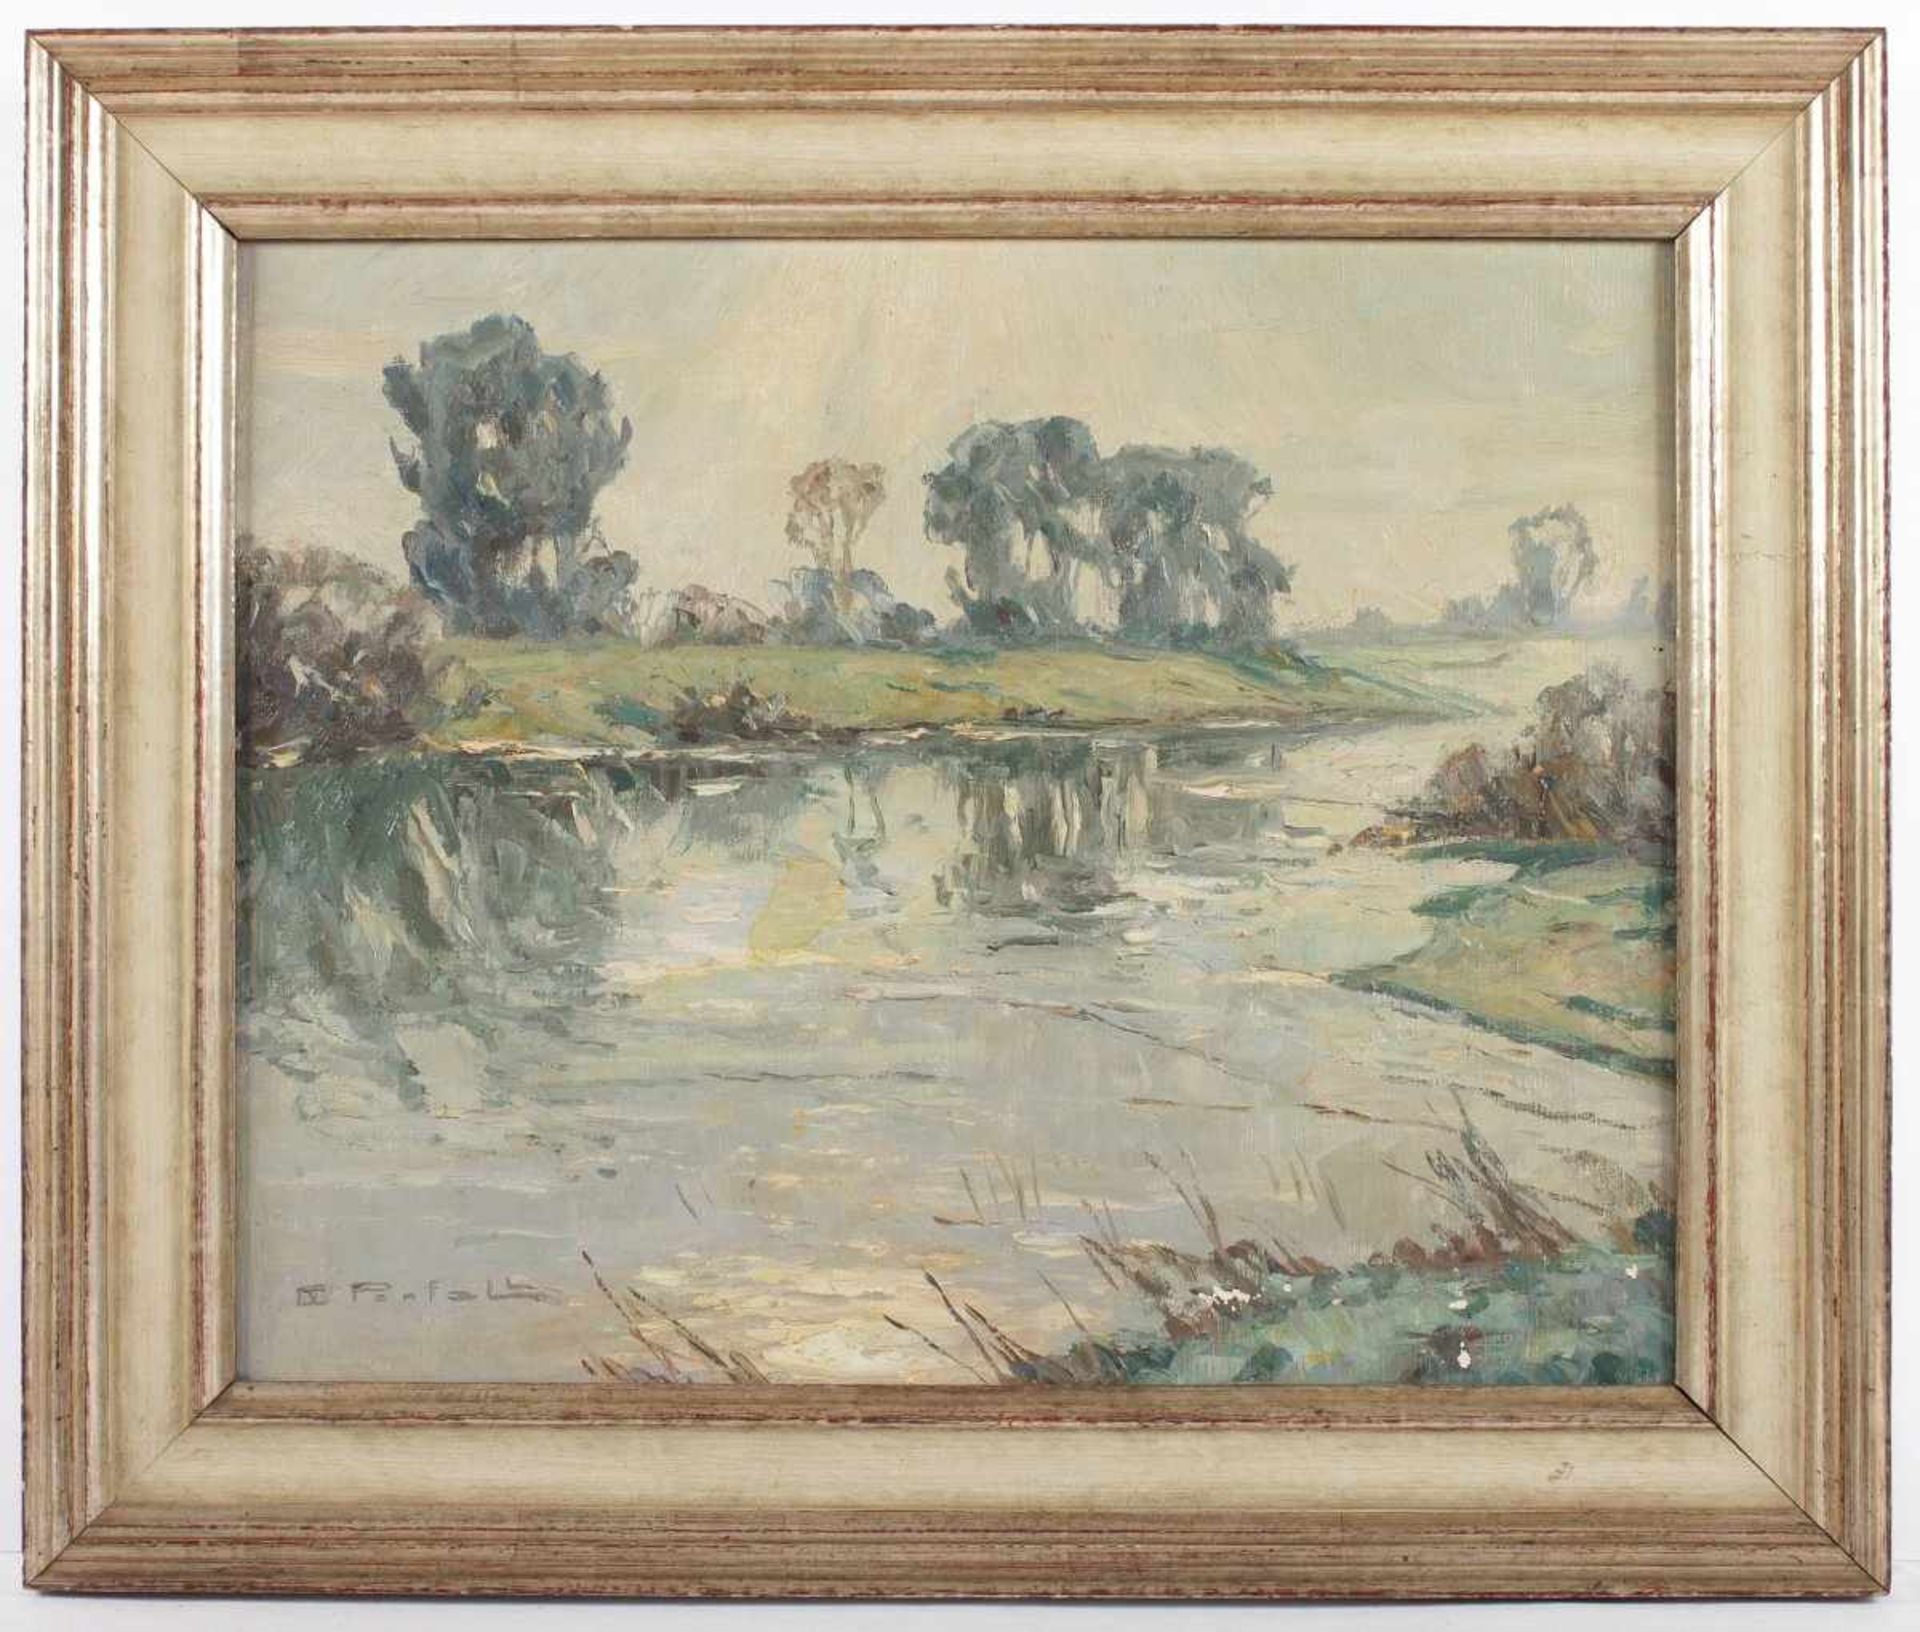 PERFALL, Erich von (1882-1961), "Flusslandschaft", Öl/Lwd., 40 x 50, unten links signiert, R. - Image 2 of 3